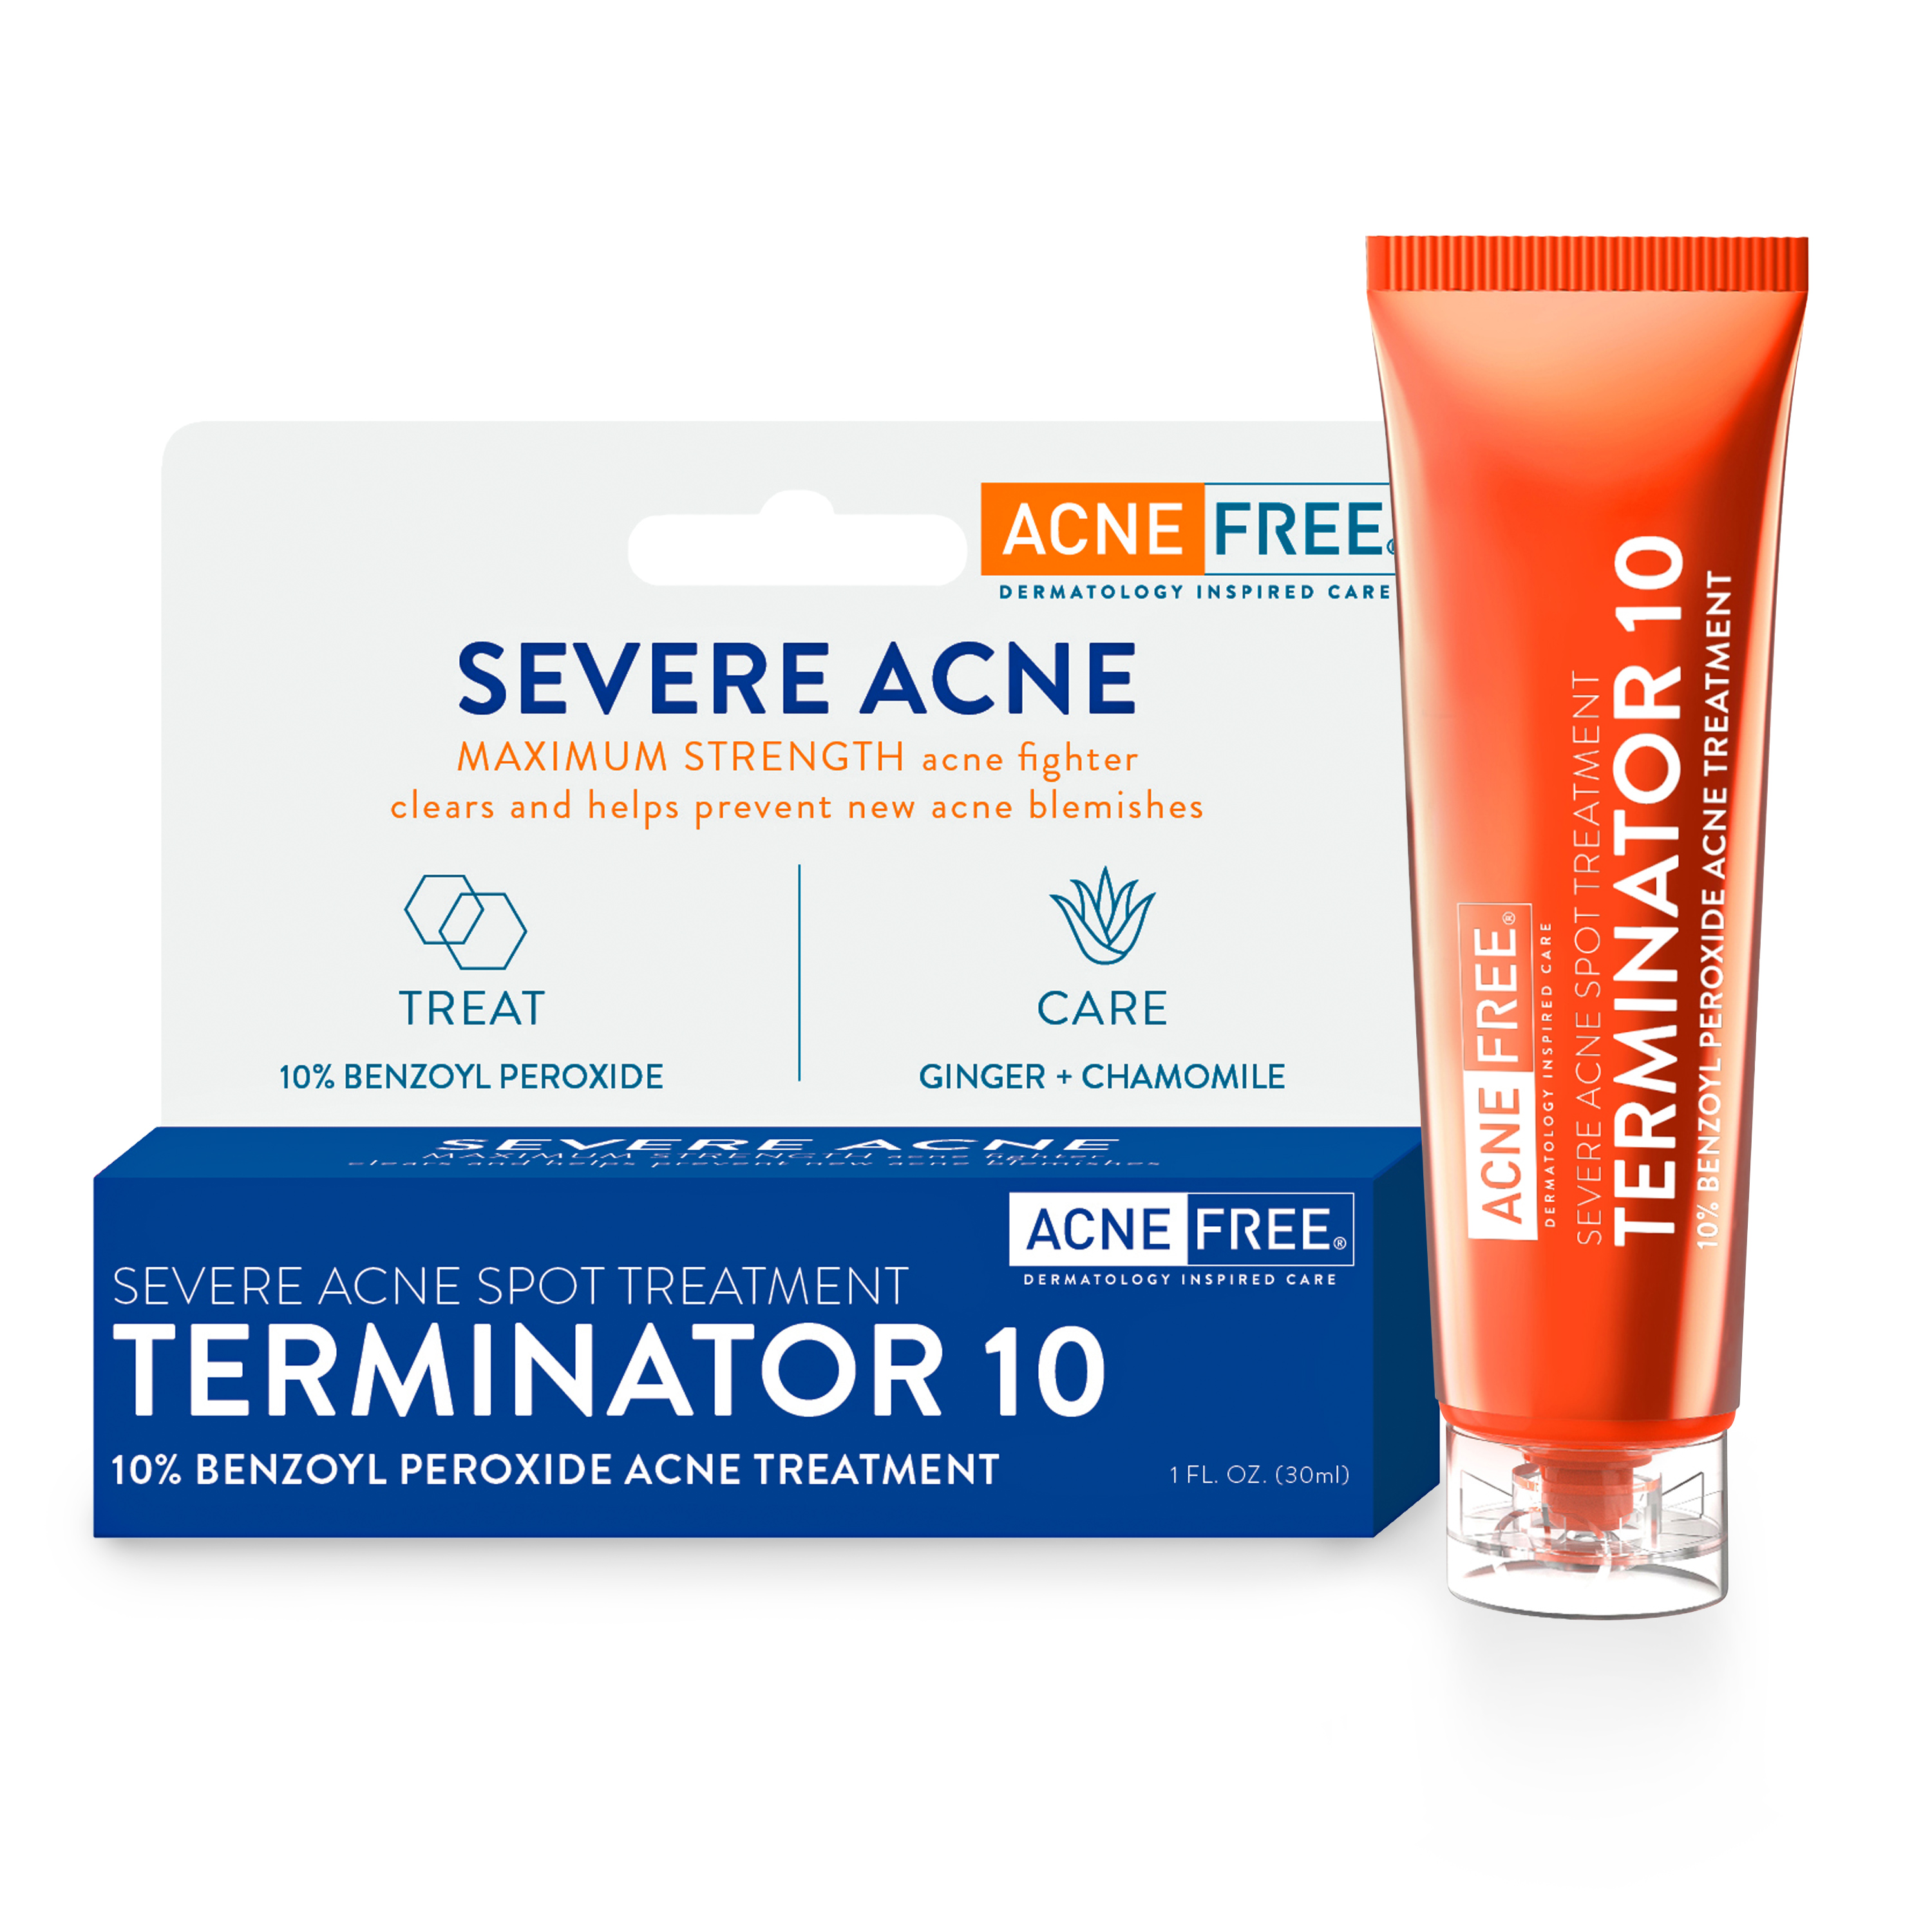 AcneFree Terminator 10 Acne Spot Treatment Cream with 10% Benzoyl Peroxide, 1 fl oz - image 1 of 11